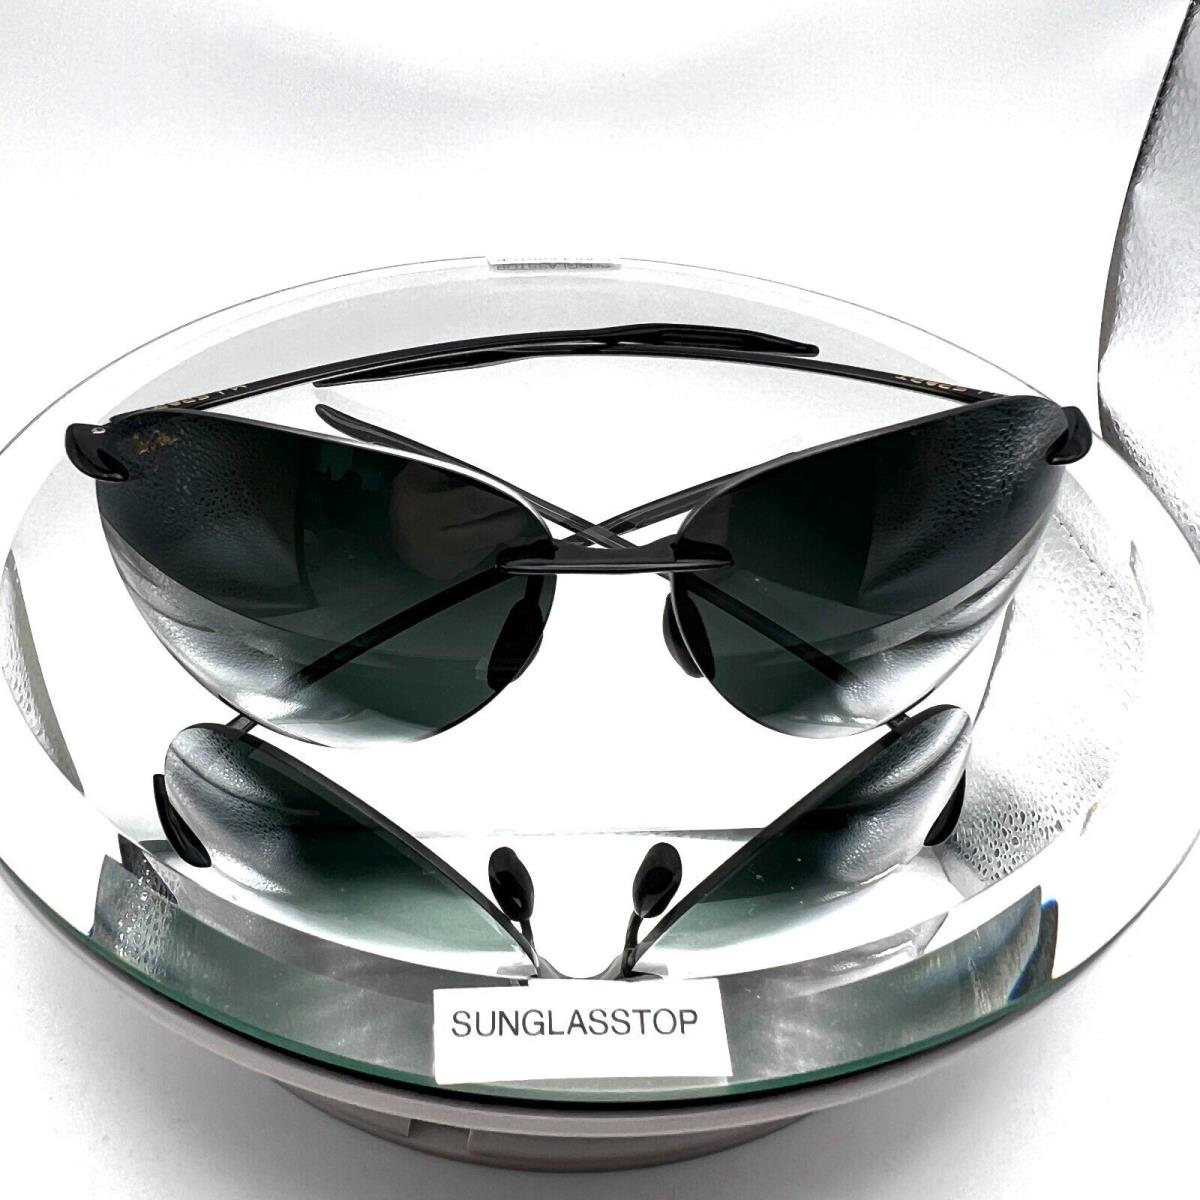 Maui Jim 421-02 Sunglasses Sugar Beach Gloss Black / Grey Polarized Lenses - Gloss Black, Frame: Black, Lens: Gray